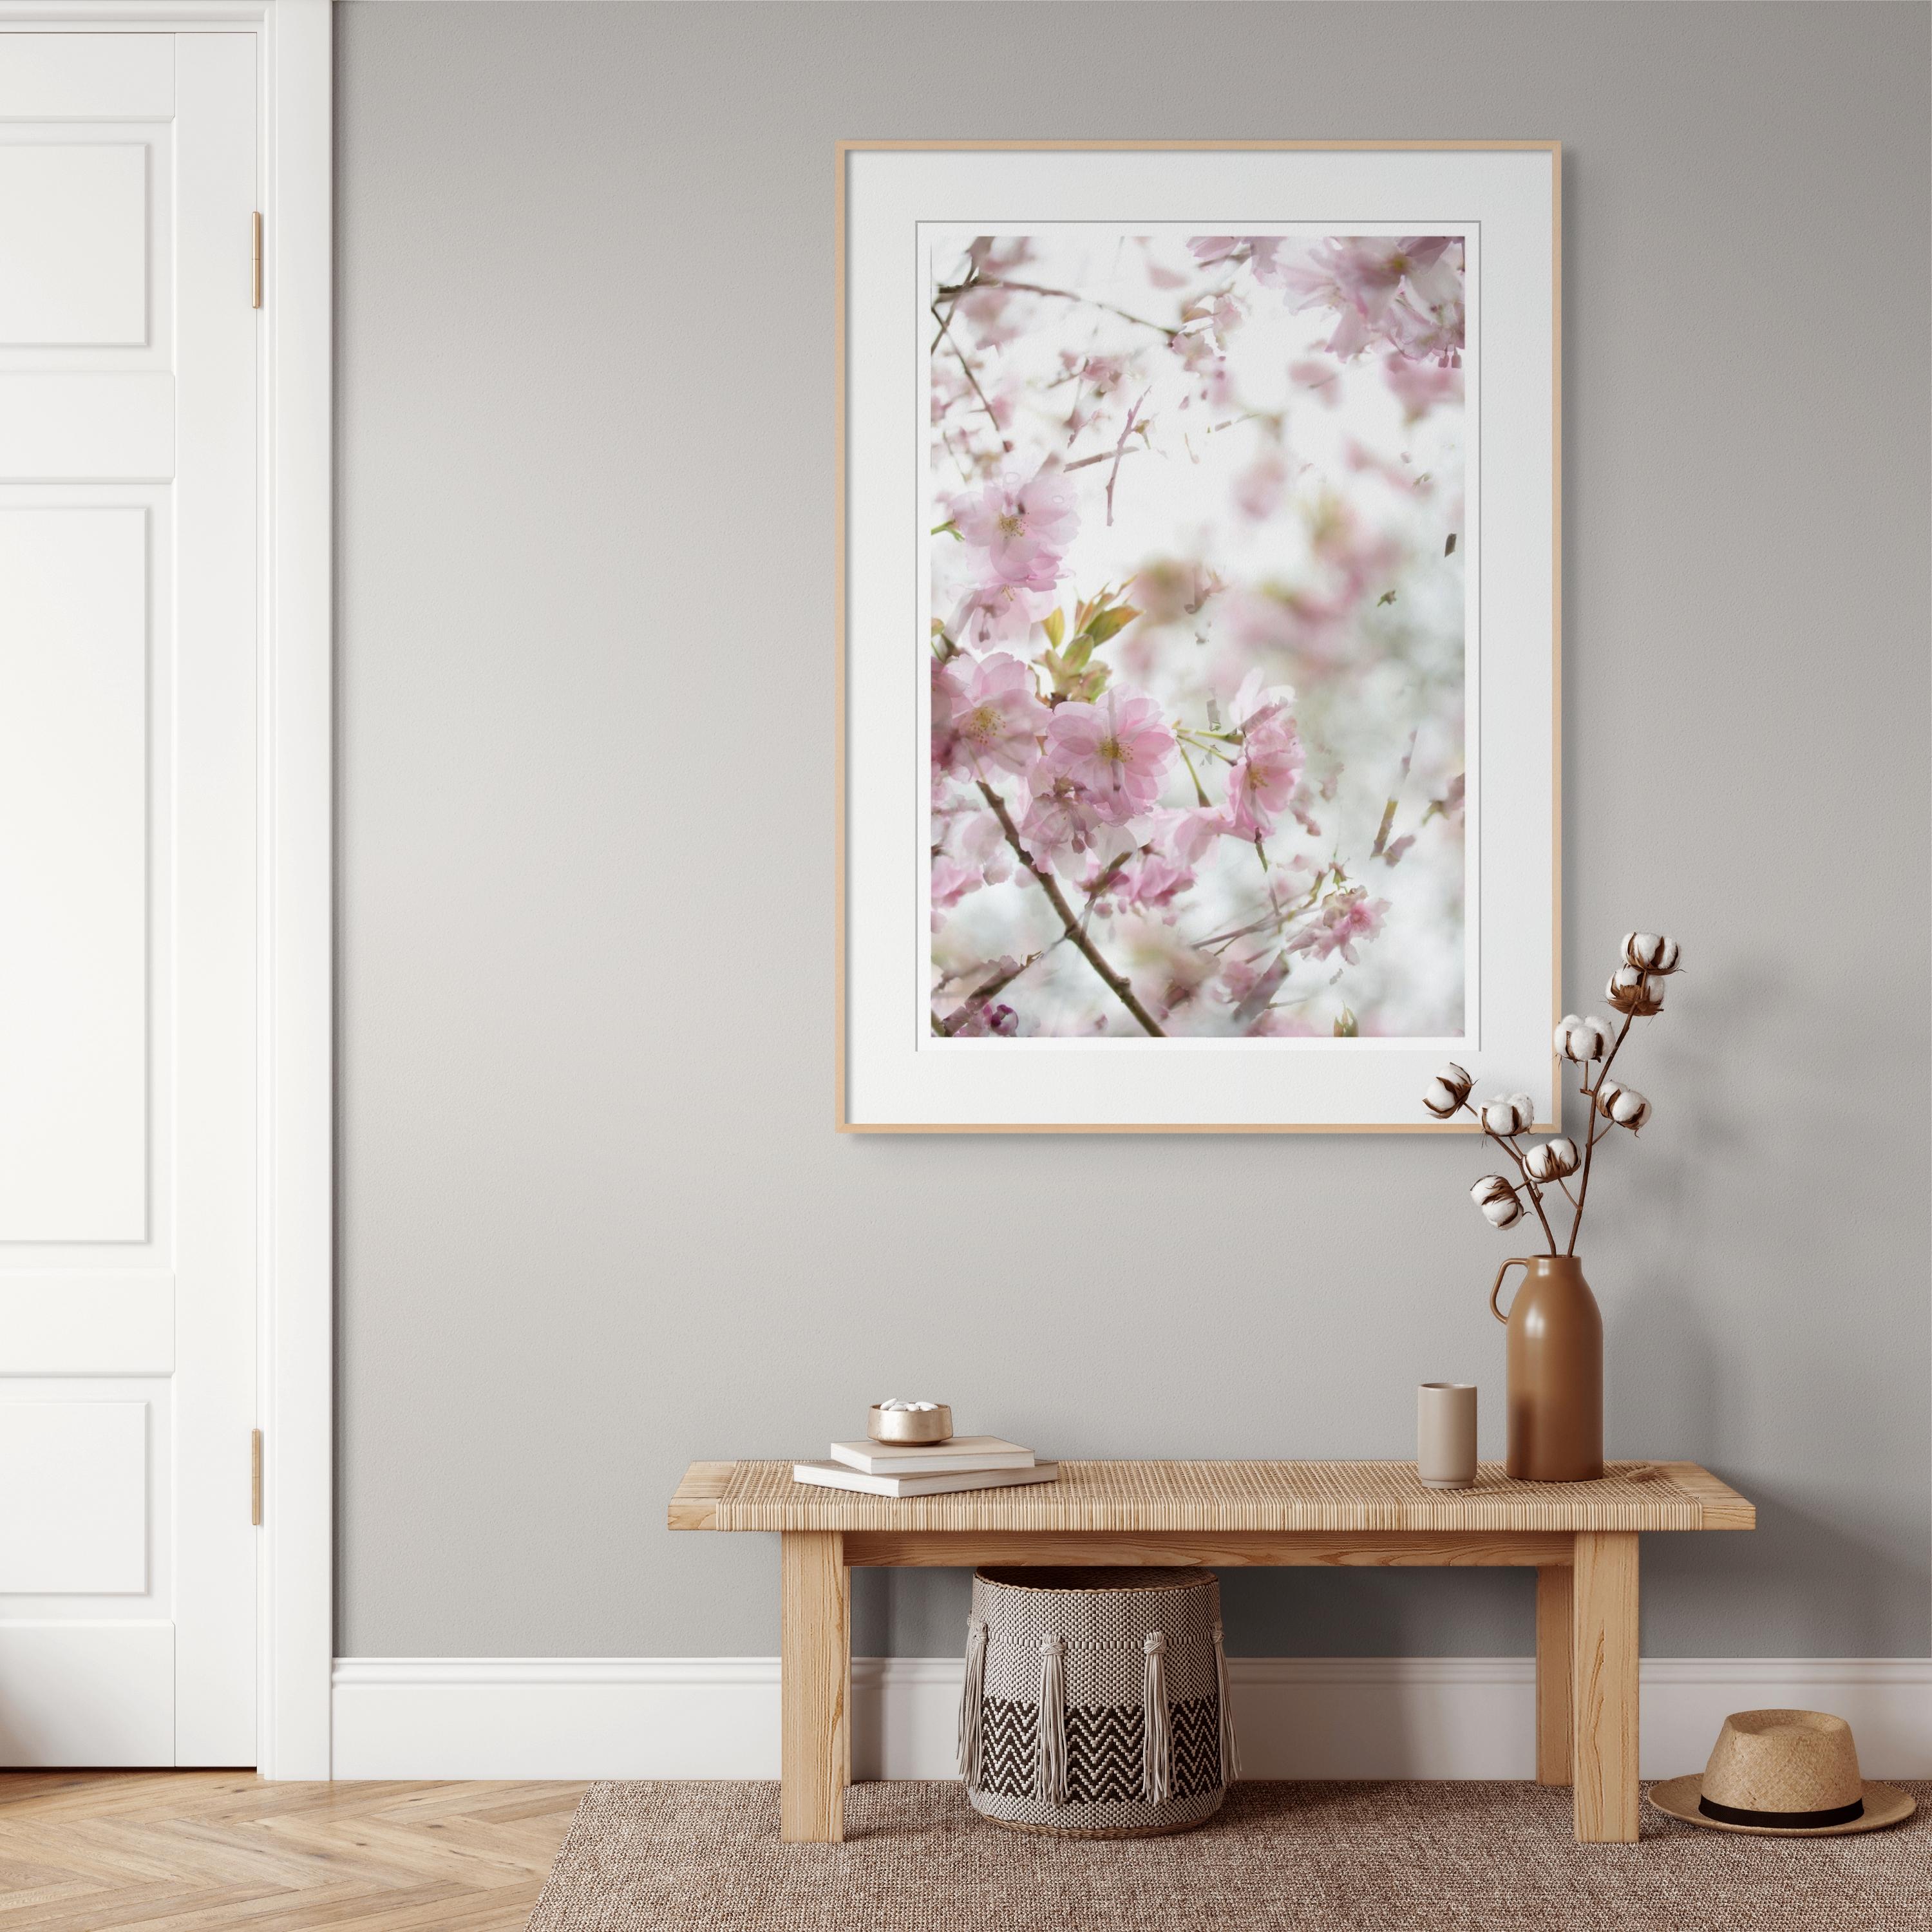 „The Optimism of Spring“ Fotografie Kirschblüte Sakura Blumen Grün Rosa – Photograph von Sophia Milligan